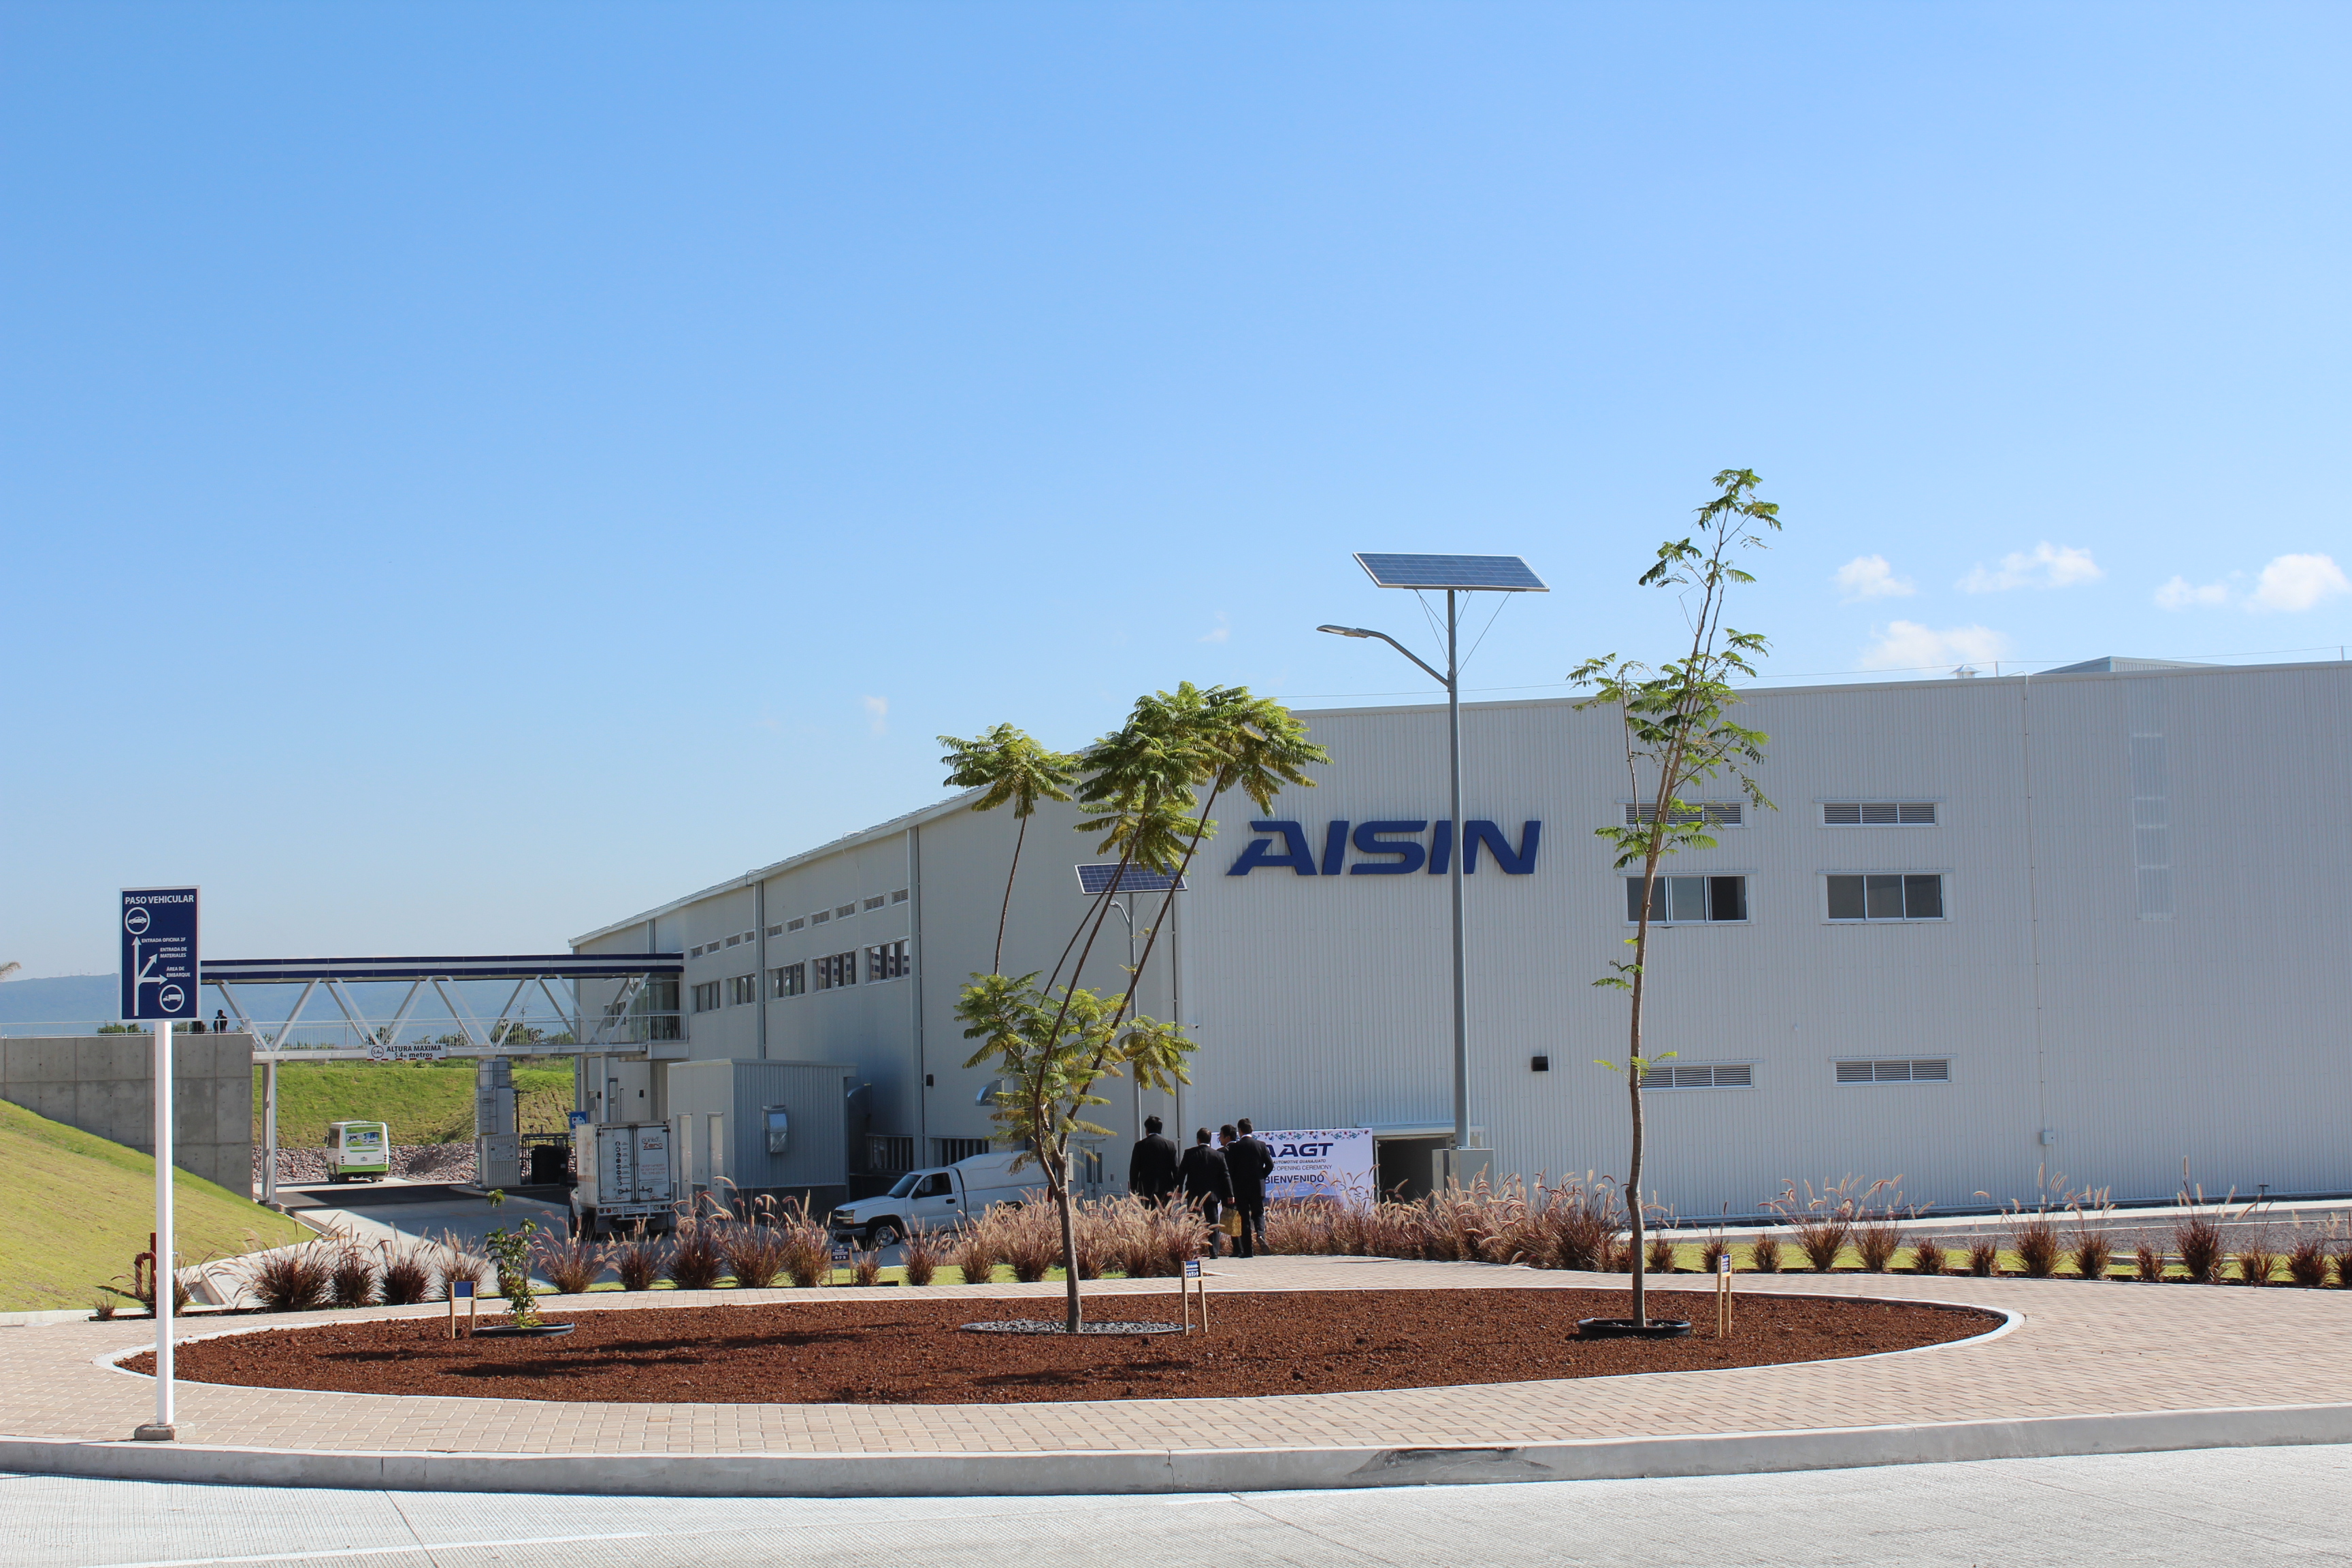 Cluster Industrial - Aisin automotive llega a parque industrial marabis en comonfort